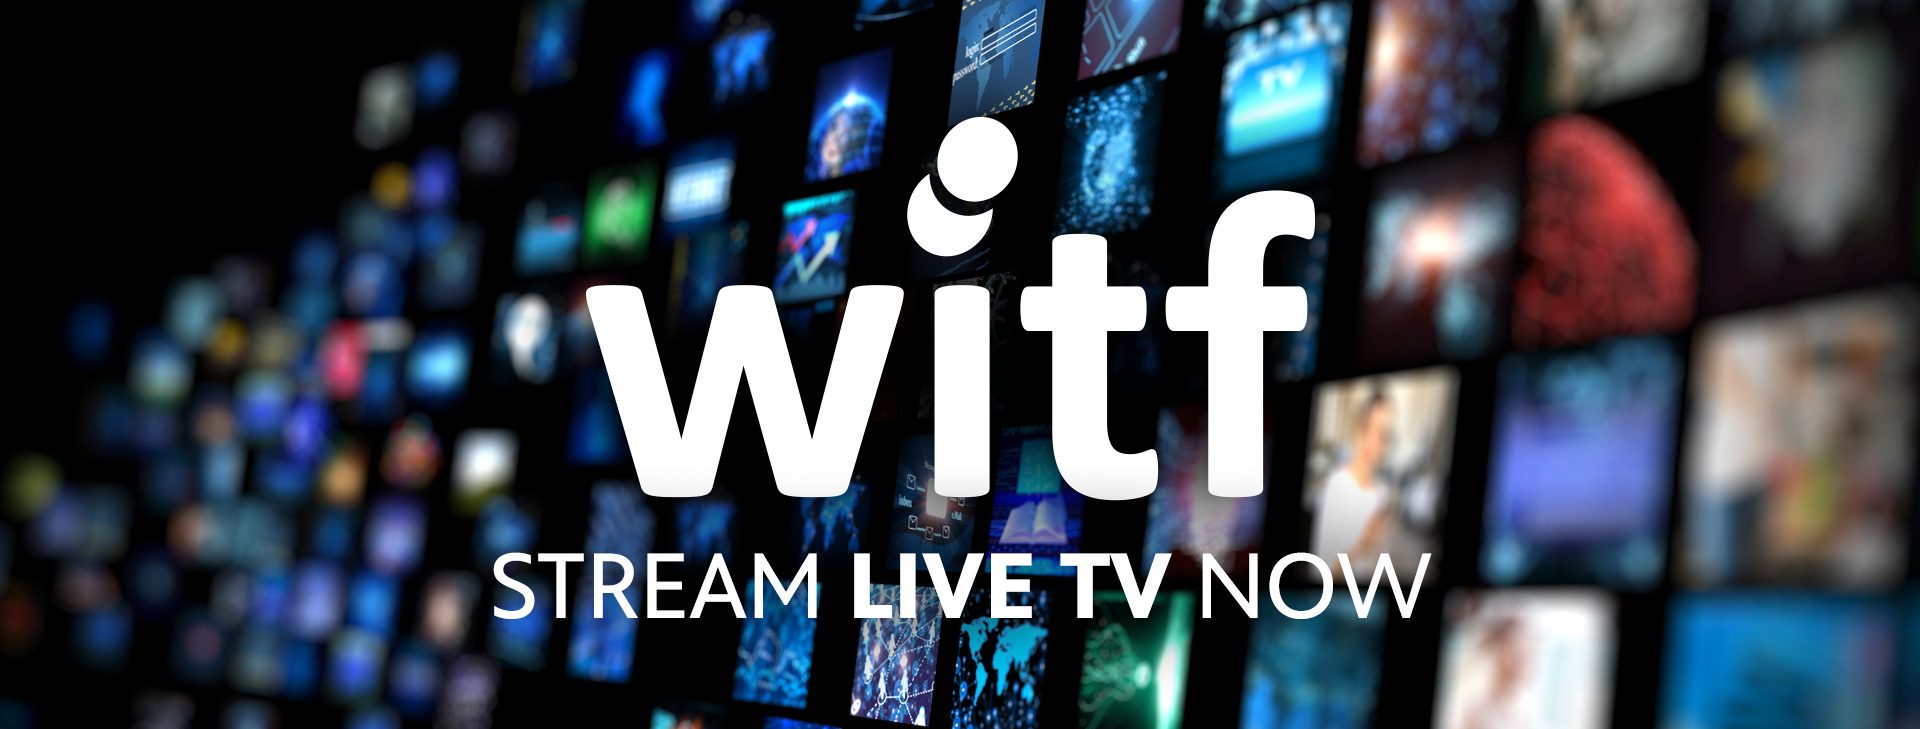 WITF TV Now Streaming WITF